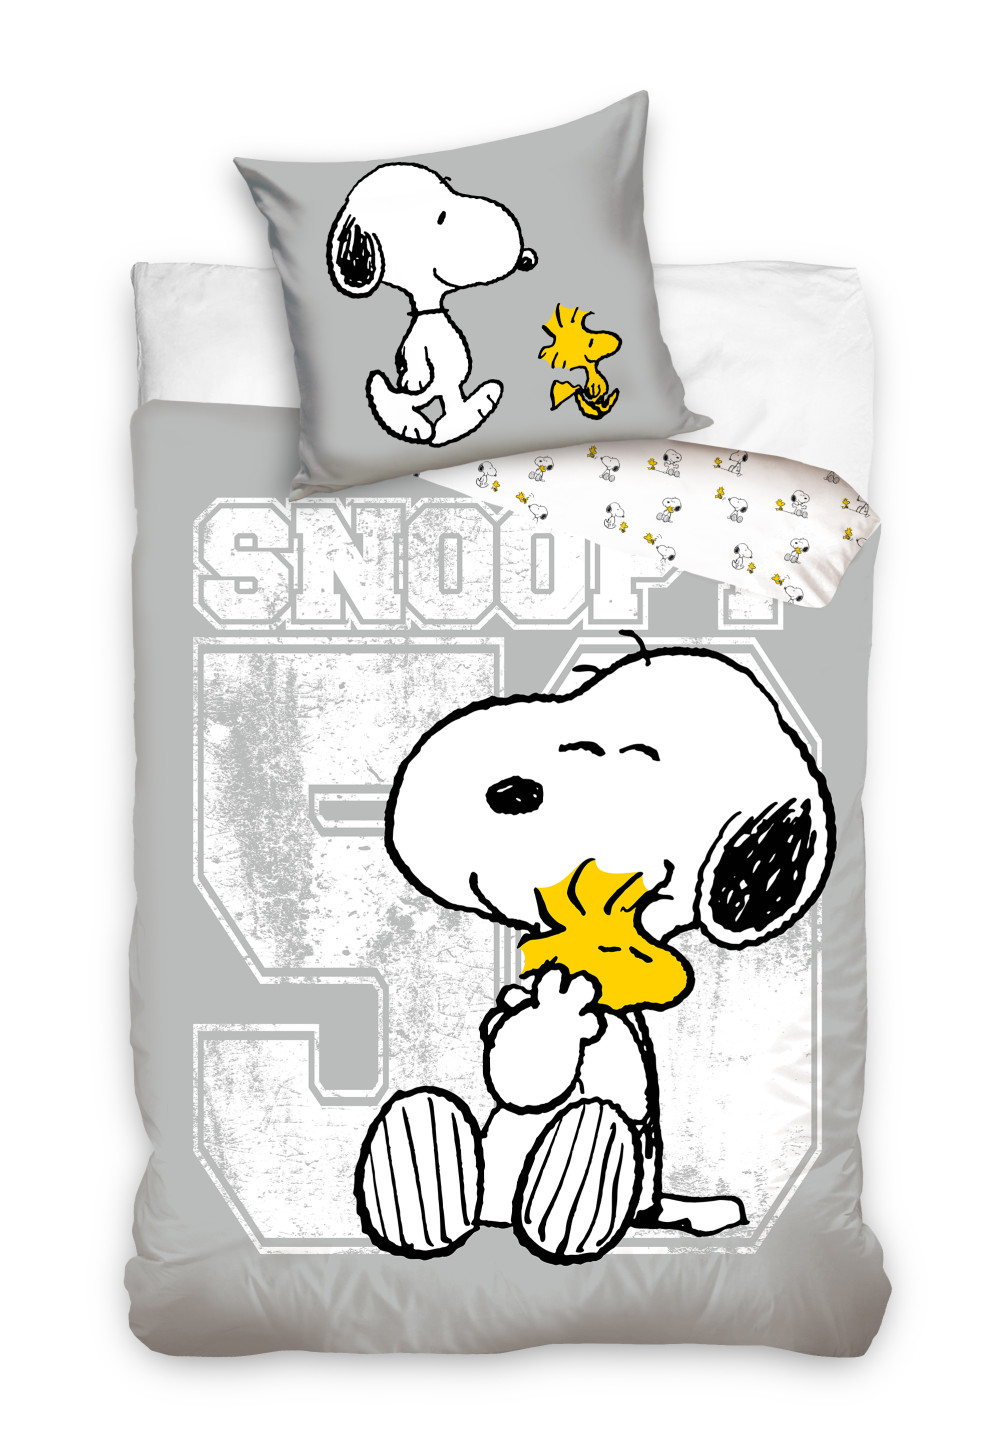 Peanuts Snoopy Bettwäsche Set 140 × 200 cm + 70 × 90 cm